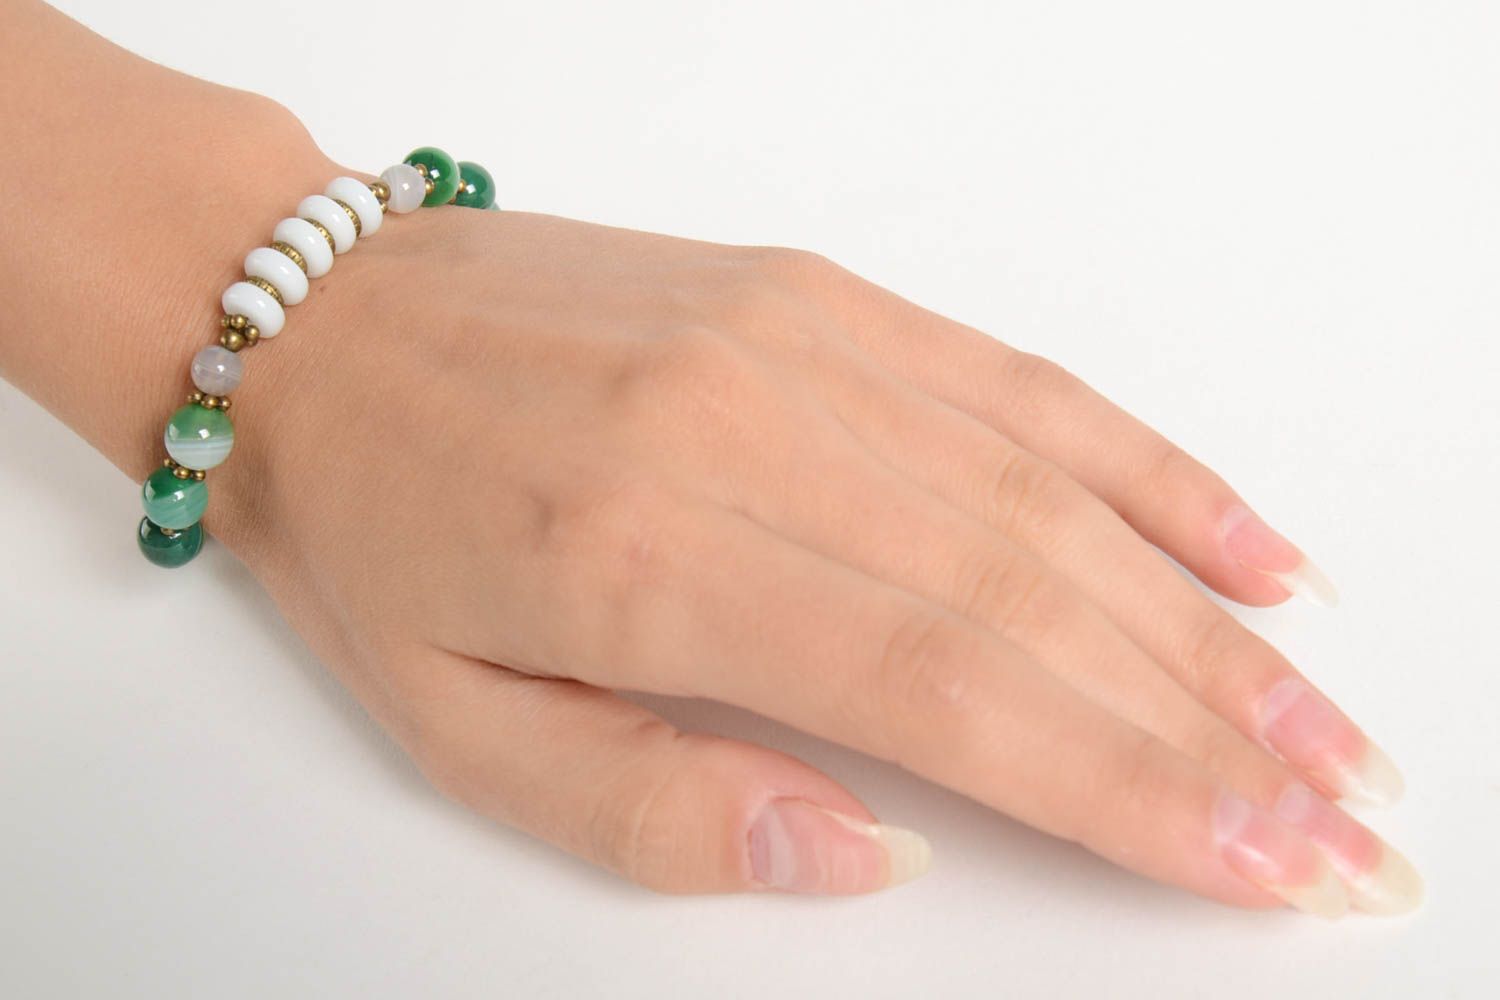 Beautiful handmade stone bracelet artisan jewelry designs gifts for her photo 2